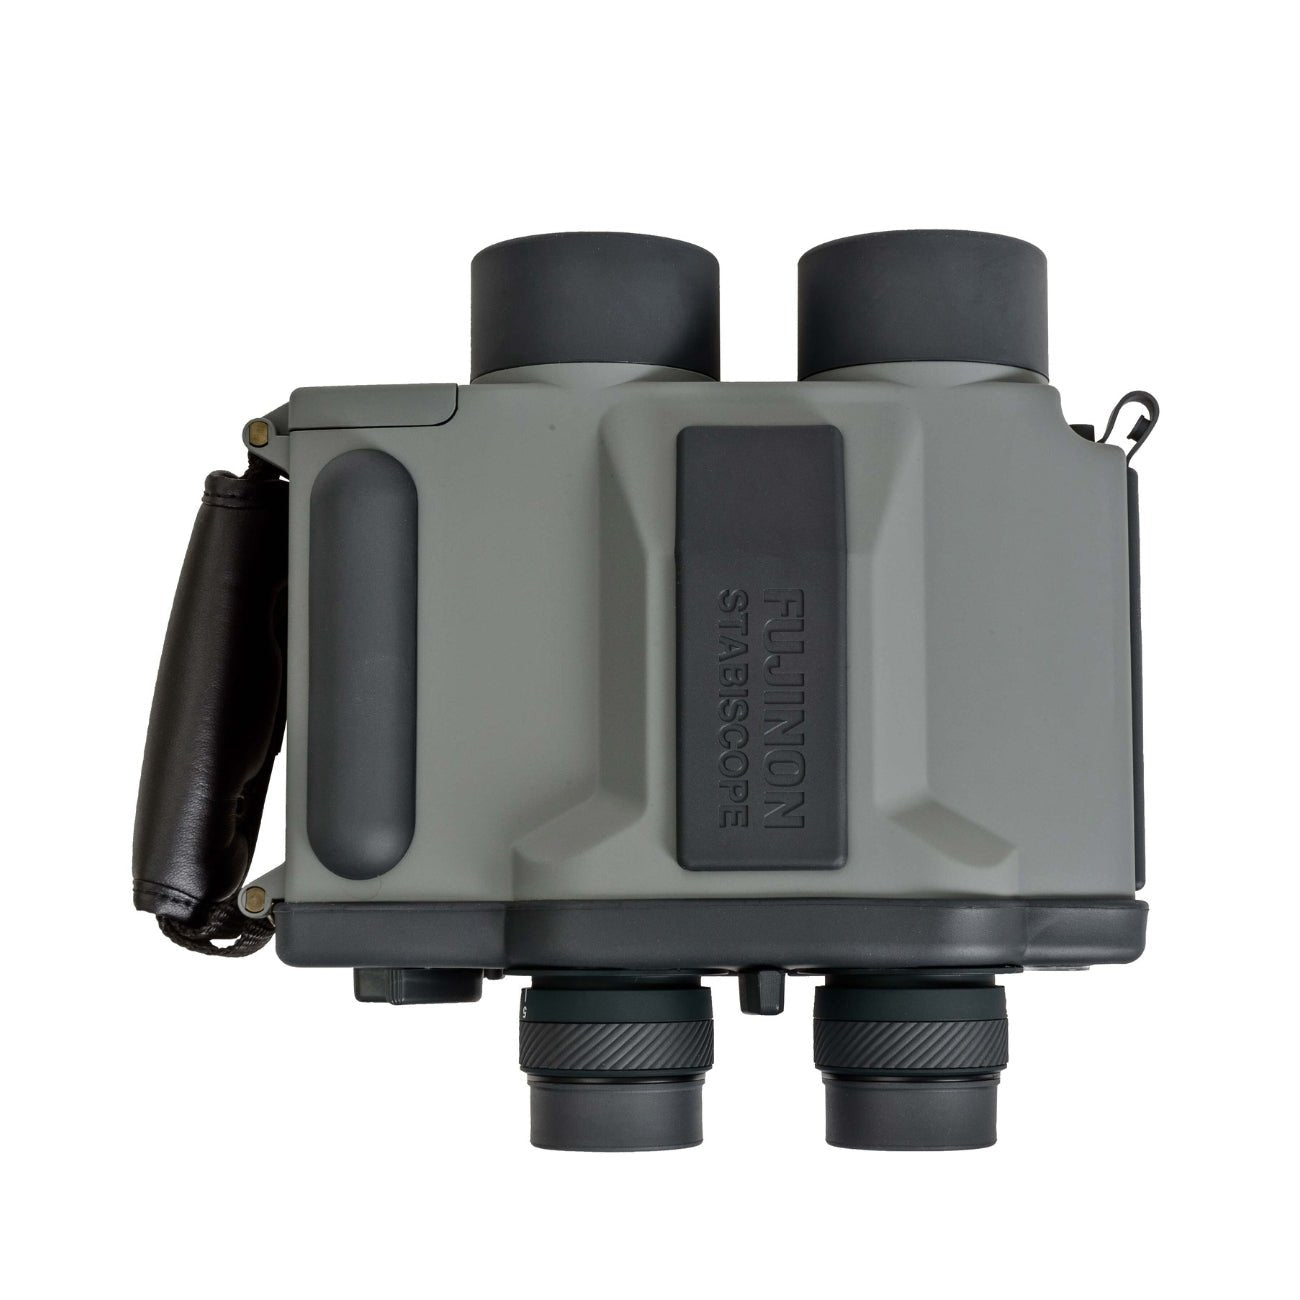 Fujinon S1640 Stabiscope 16x40mm Day/Night Vision Binoculars